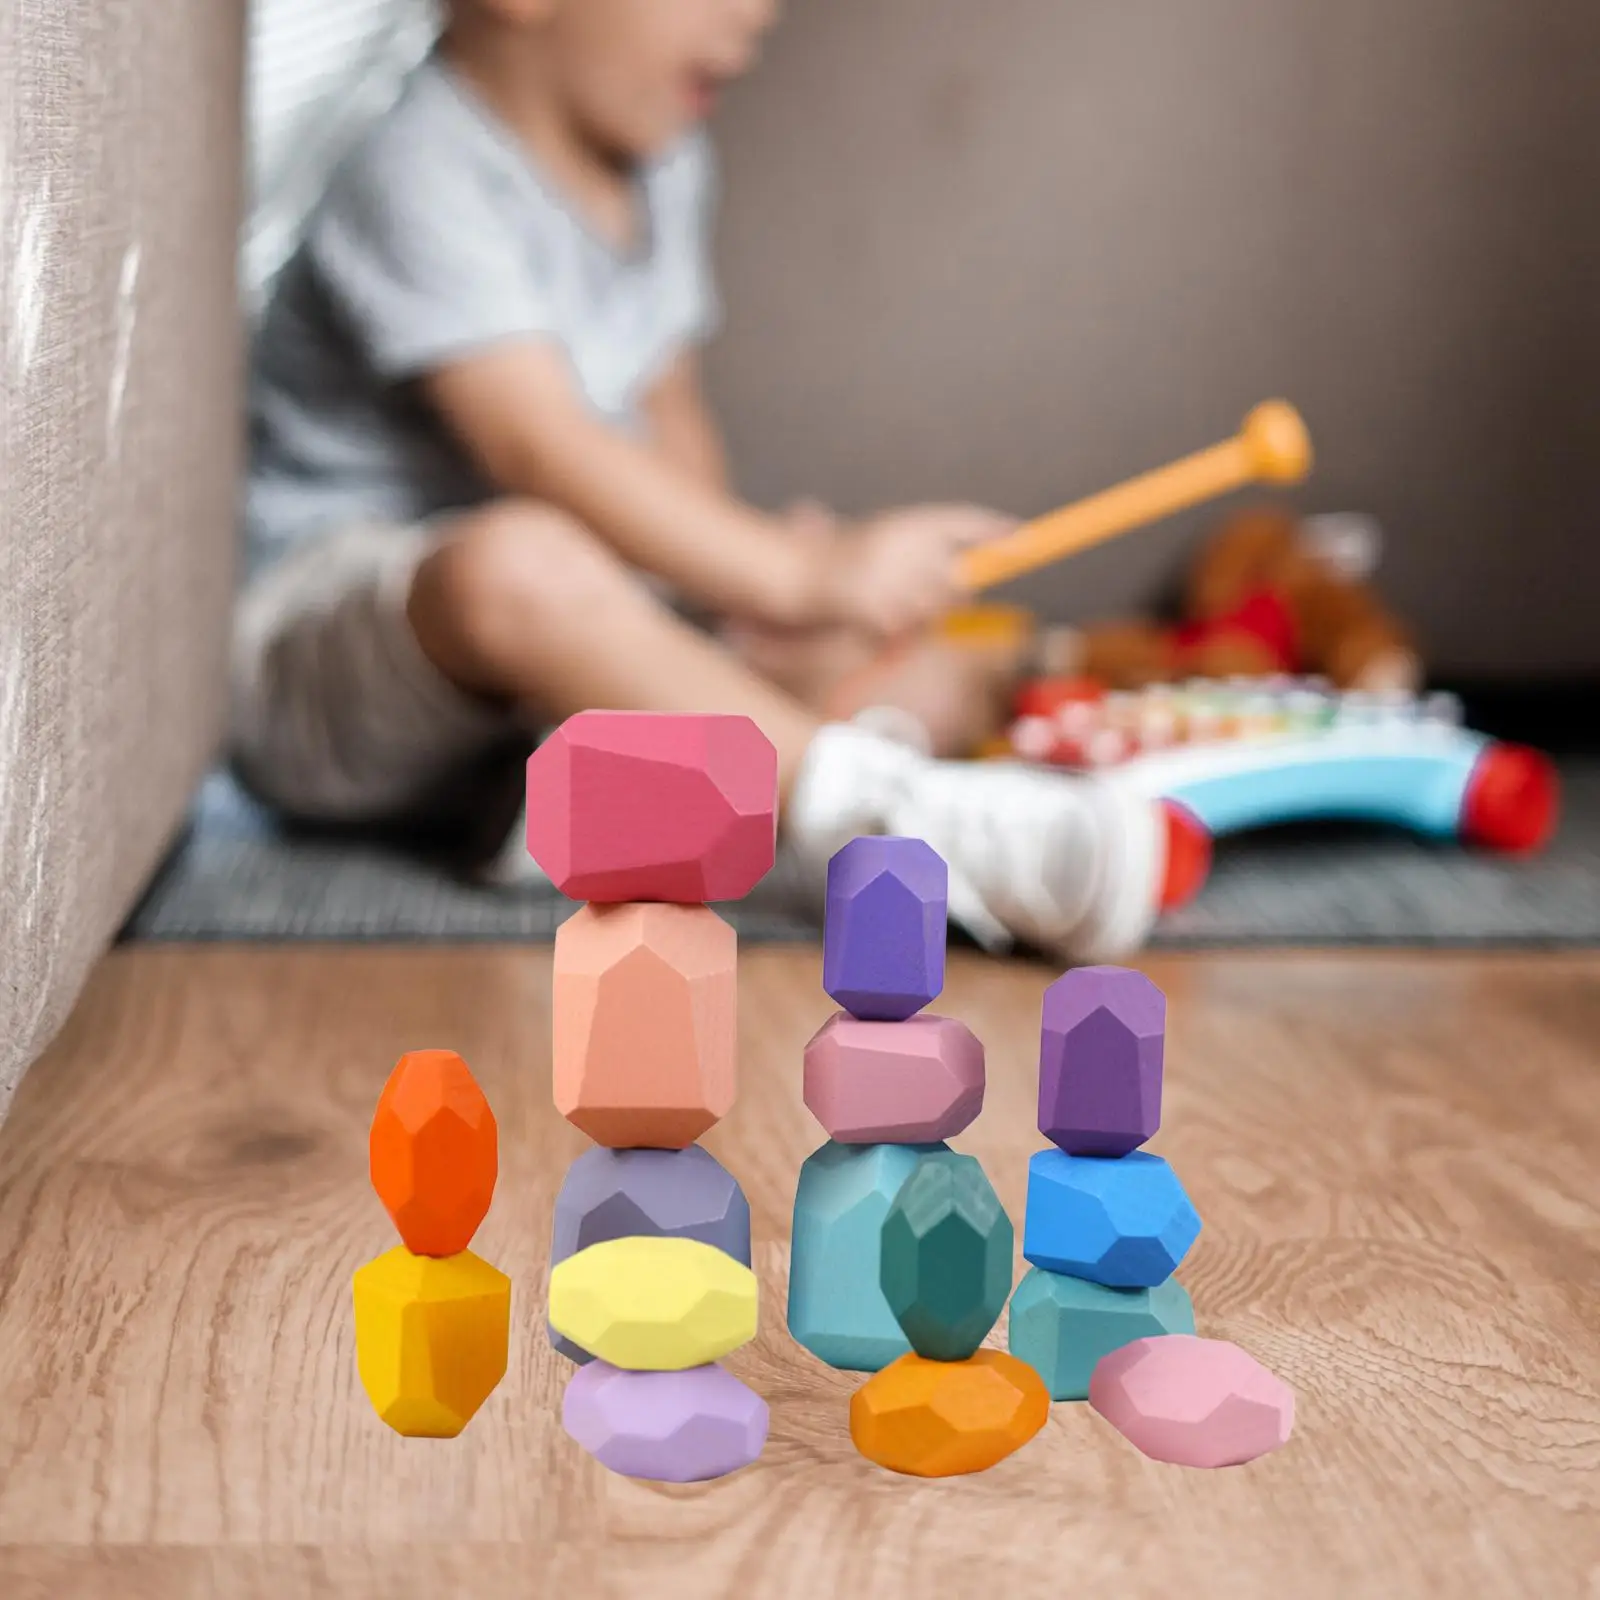 Wooden Balancing Stacking Stones Montessori Preschool Learning Building Blocks Stacking Game for Boys Girls